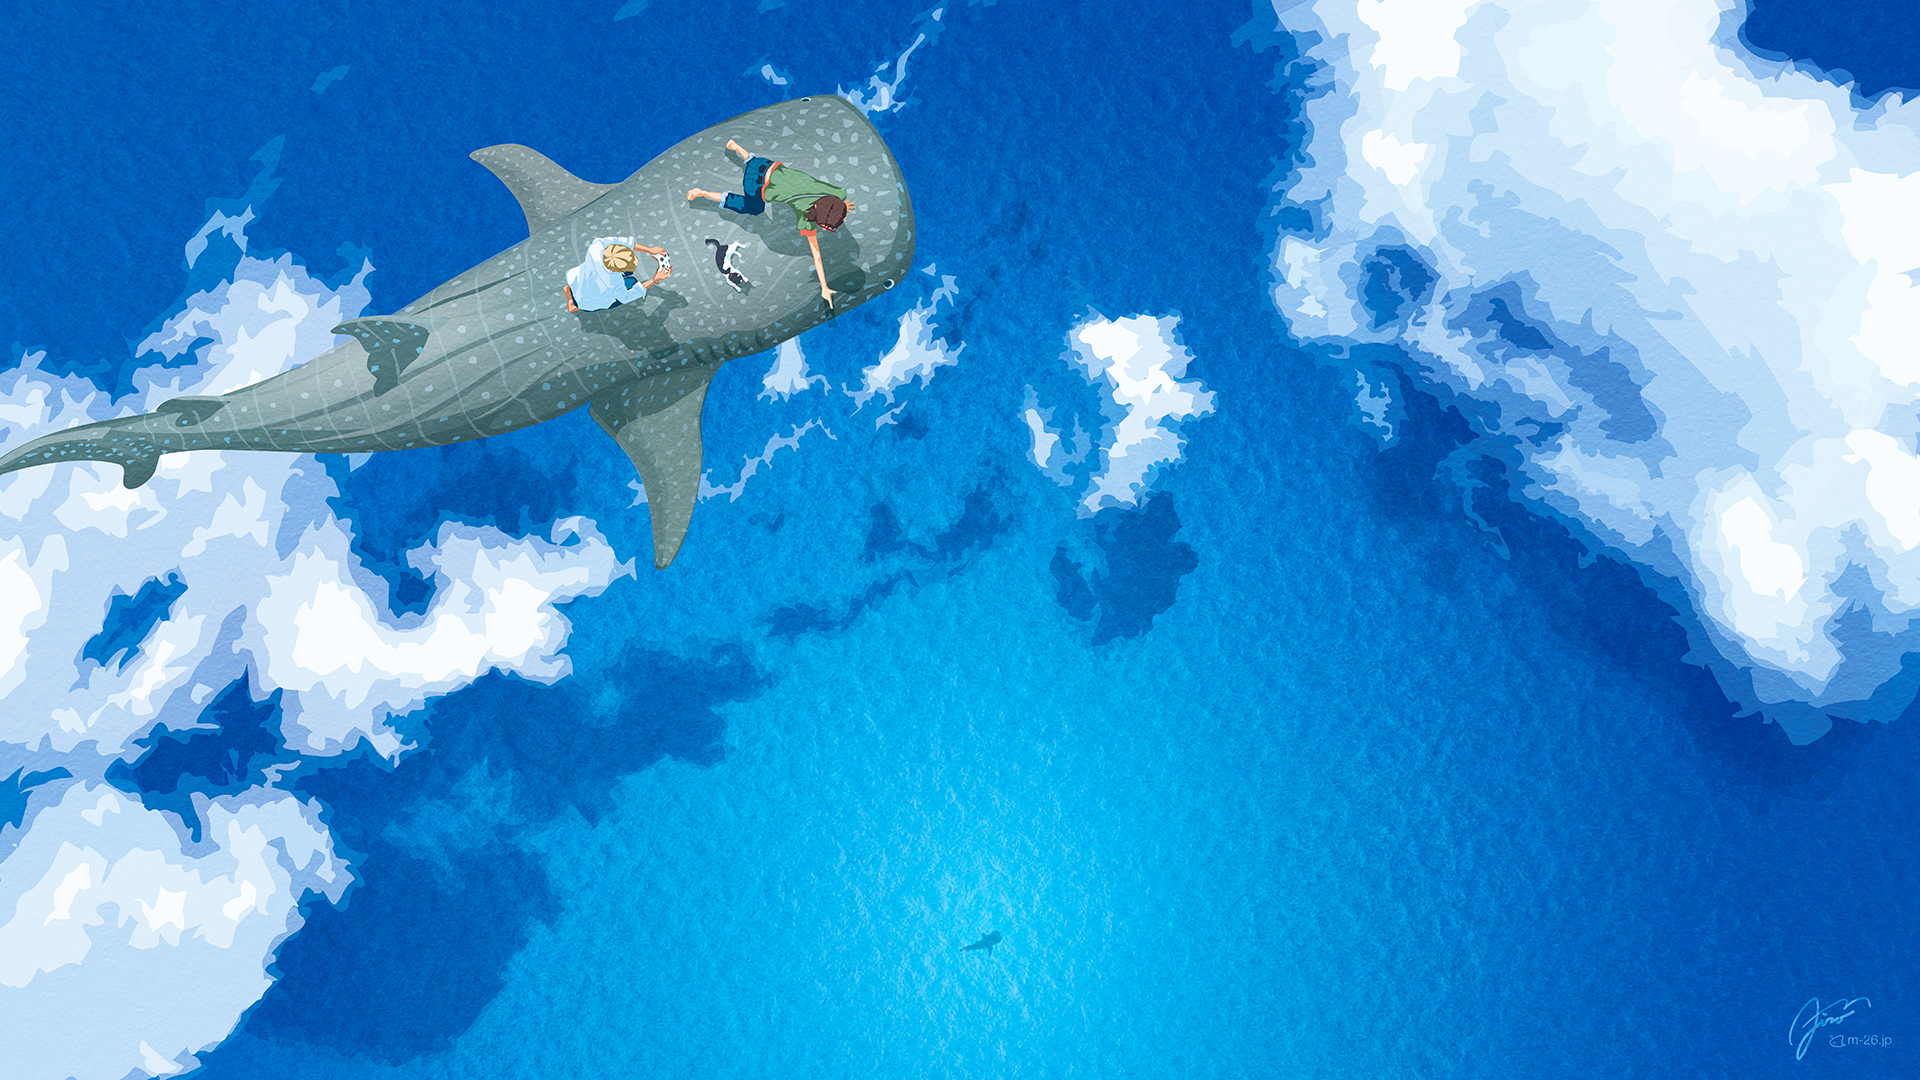 General 1920x1080 artwork digital art illustration fantasy art whale shark children cats clouds shadow watermarked